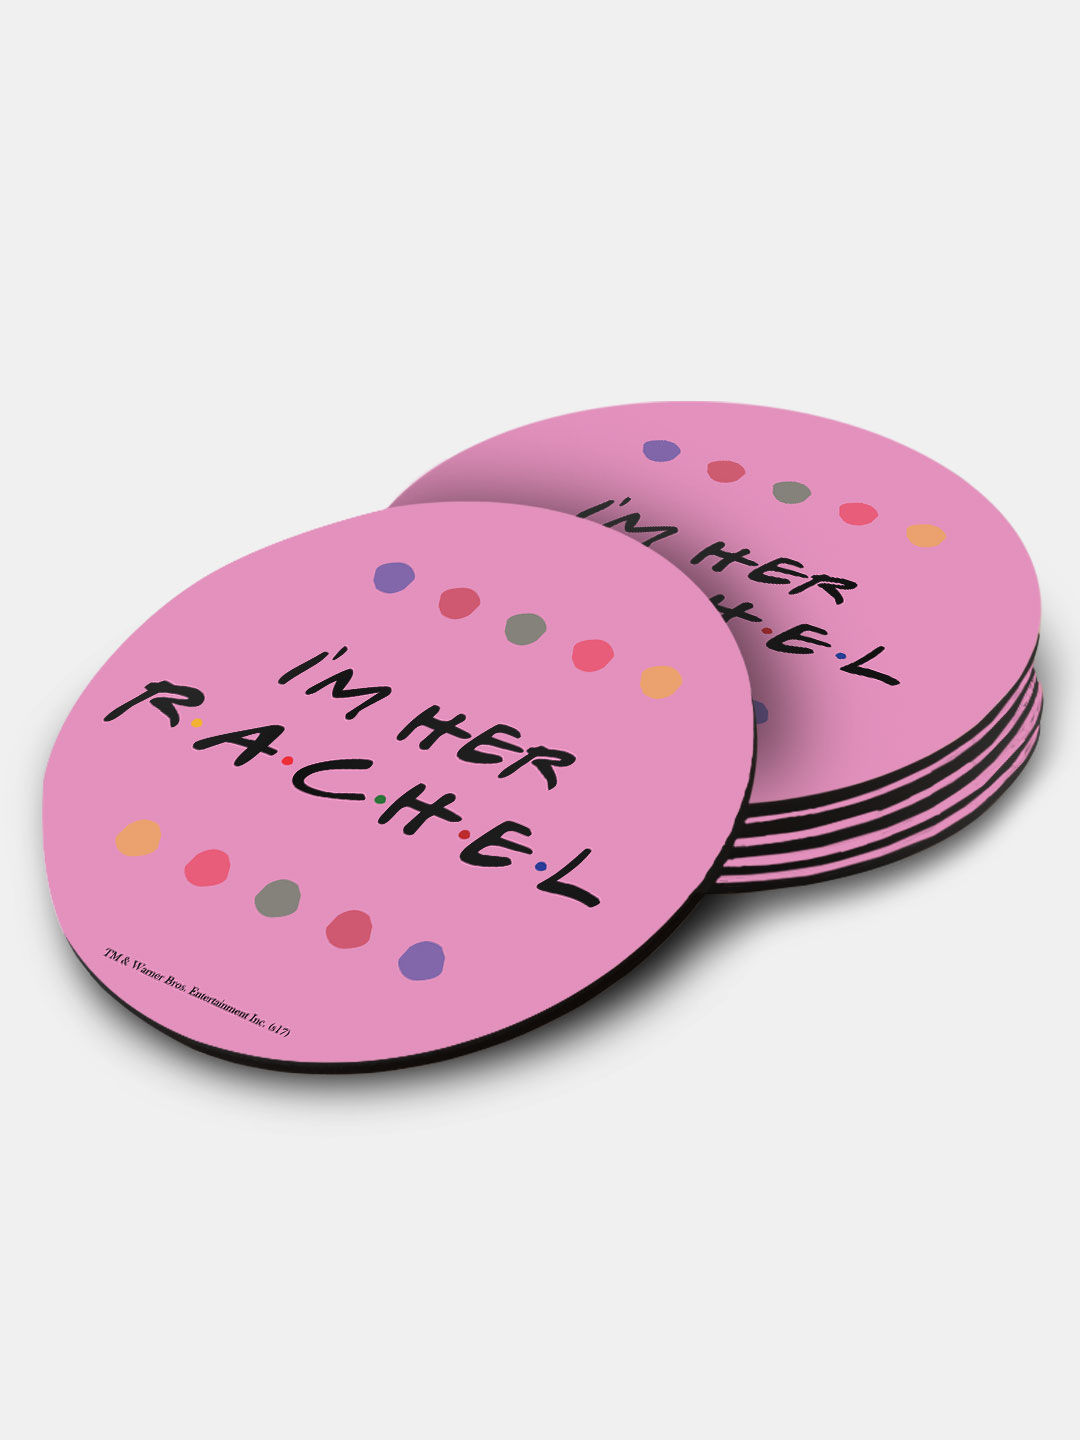 Buy Valentine Rachel - Circular Coasters Coasters Online